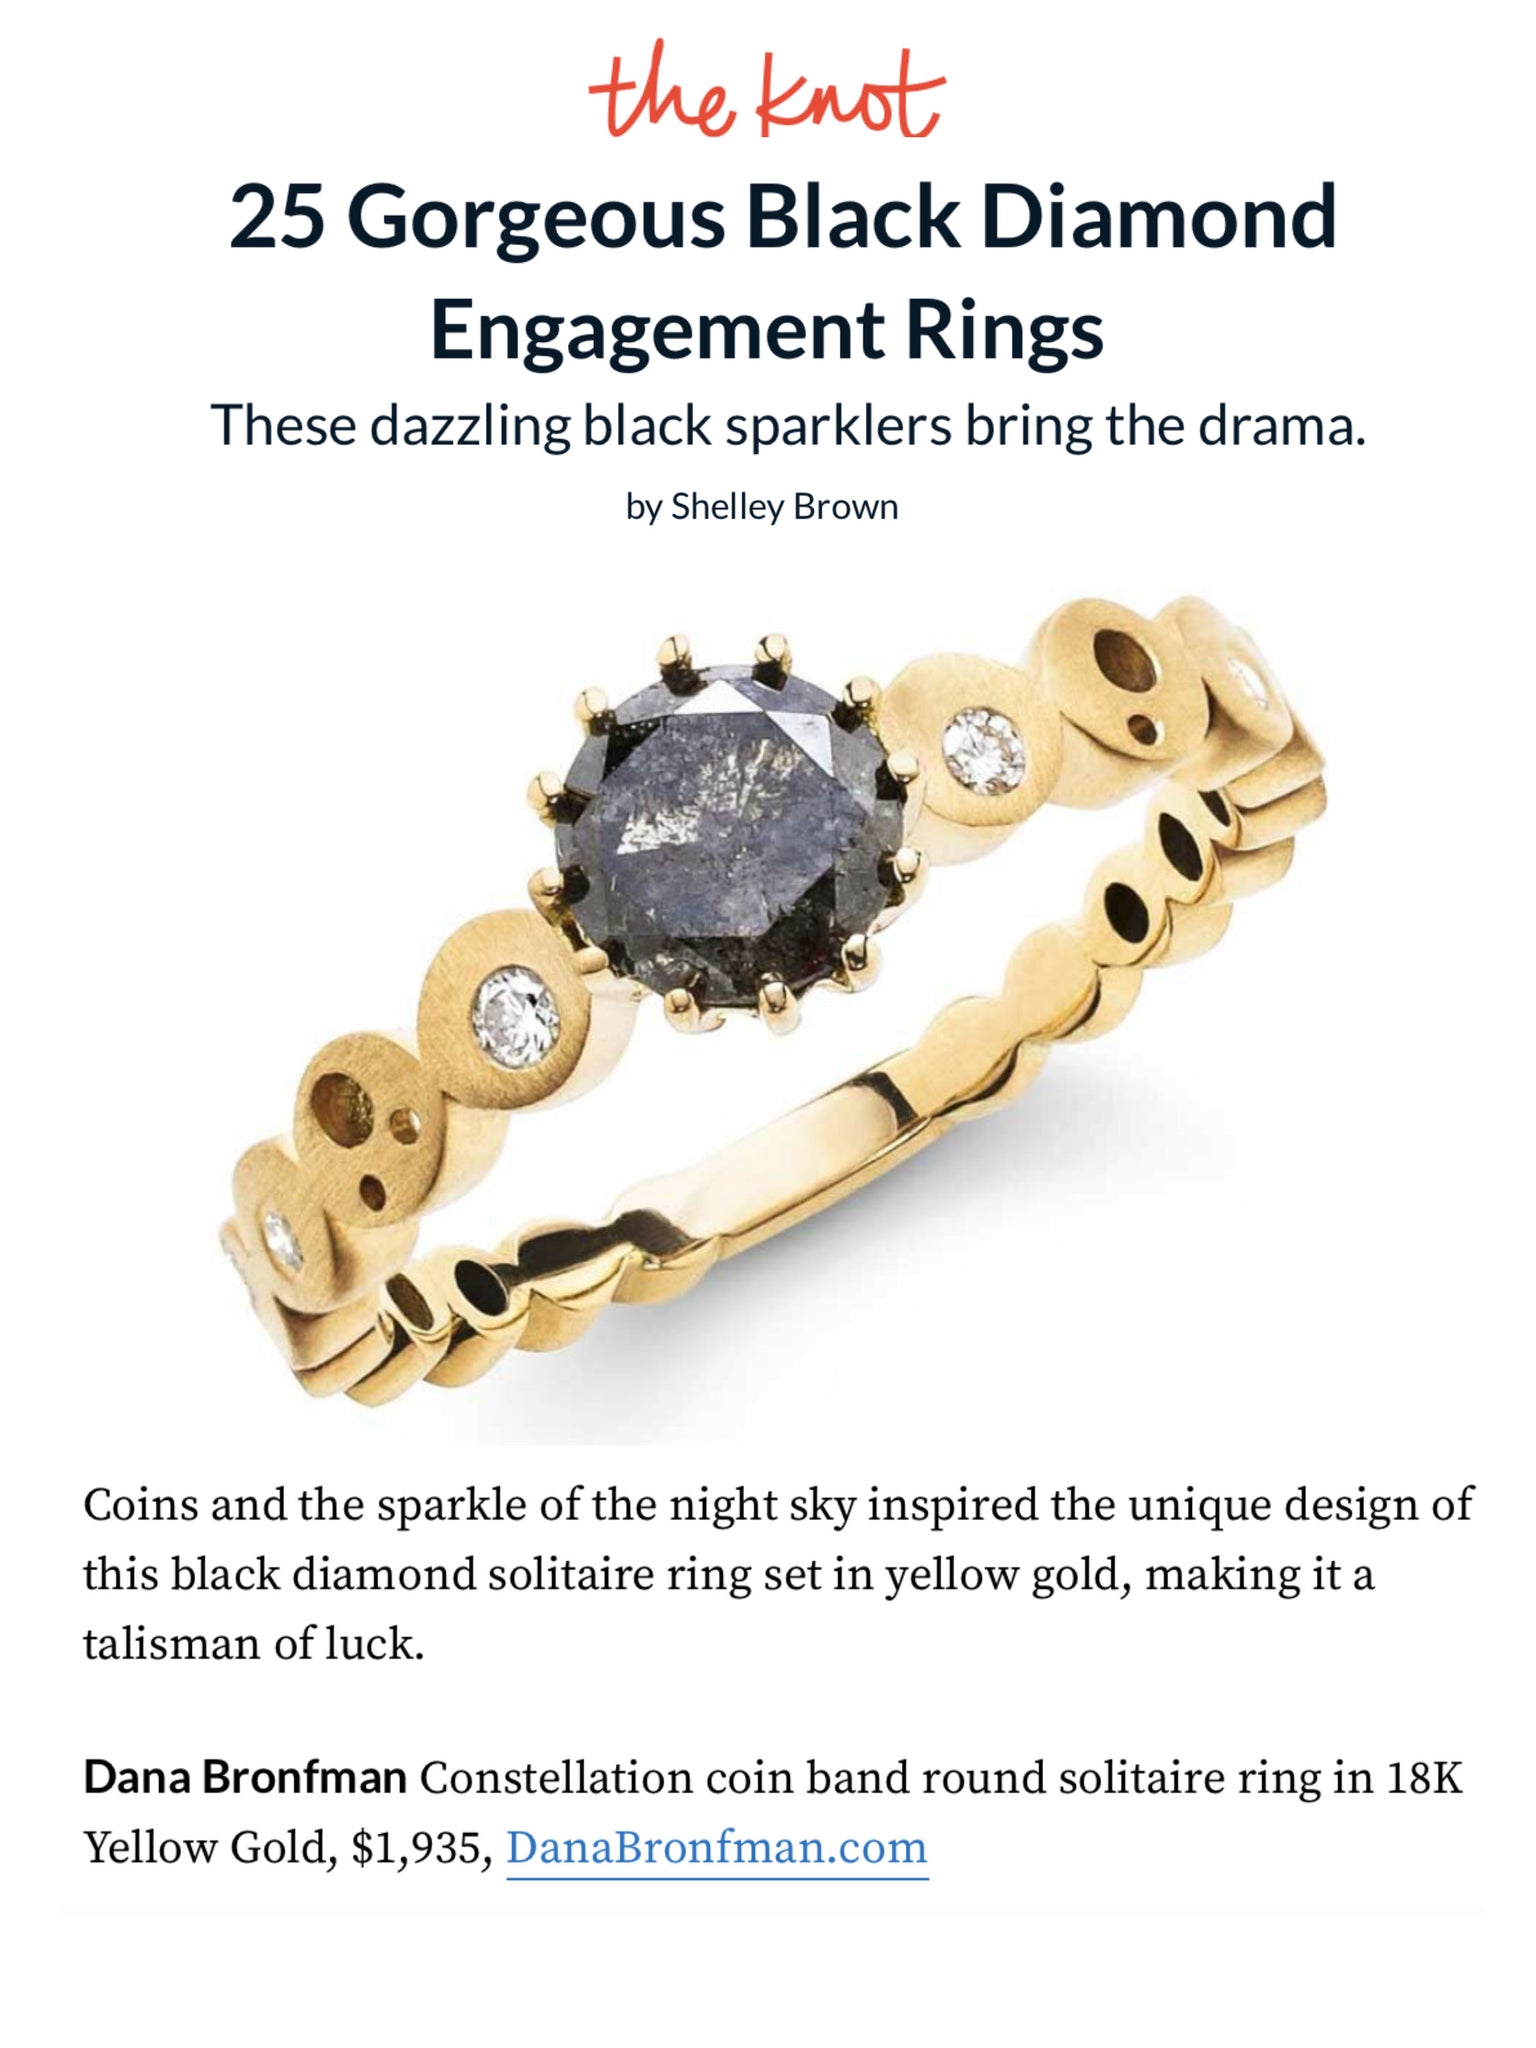 Dana Bronfman Black Diamond Engagement Ring Featured on theknot.com